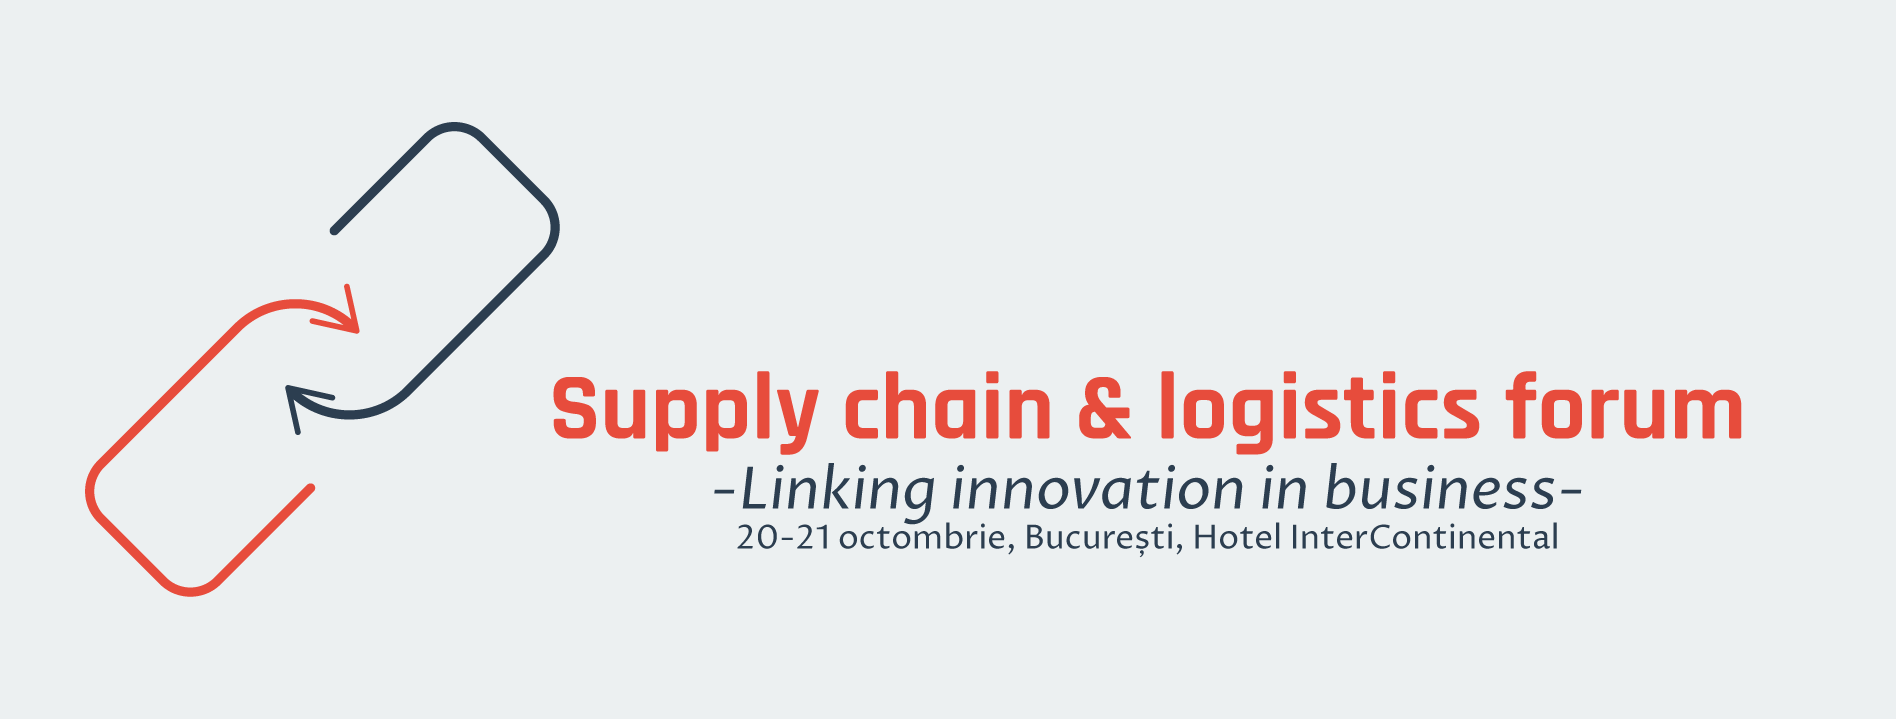 Supply Chain & Logistics Forum